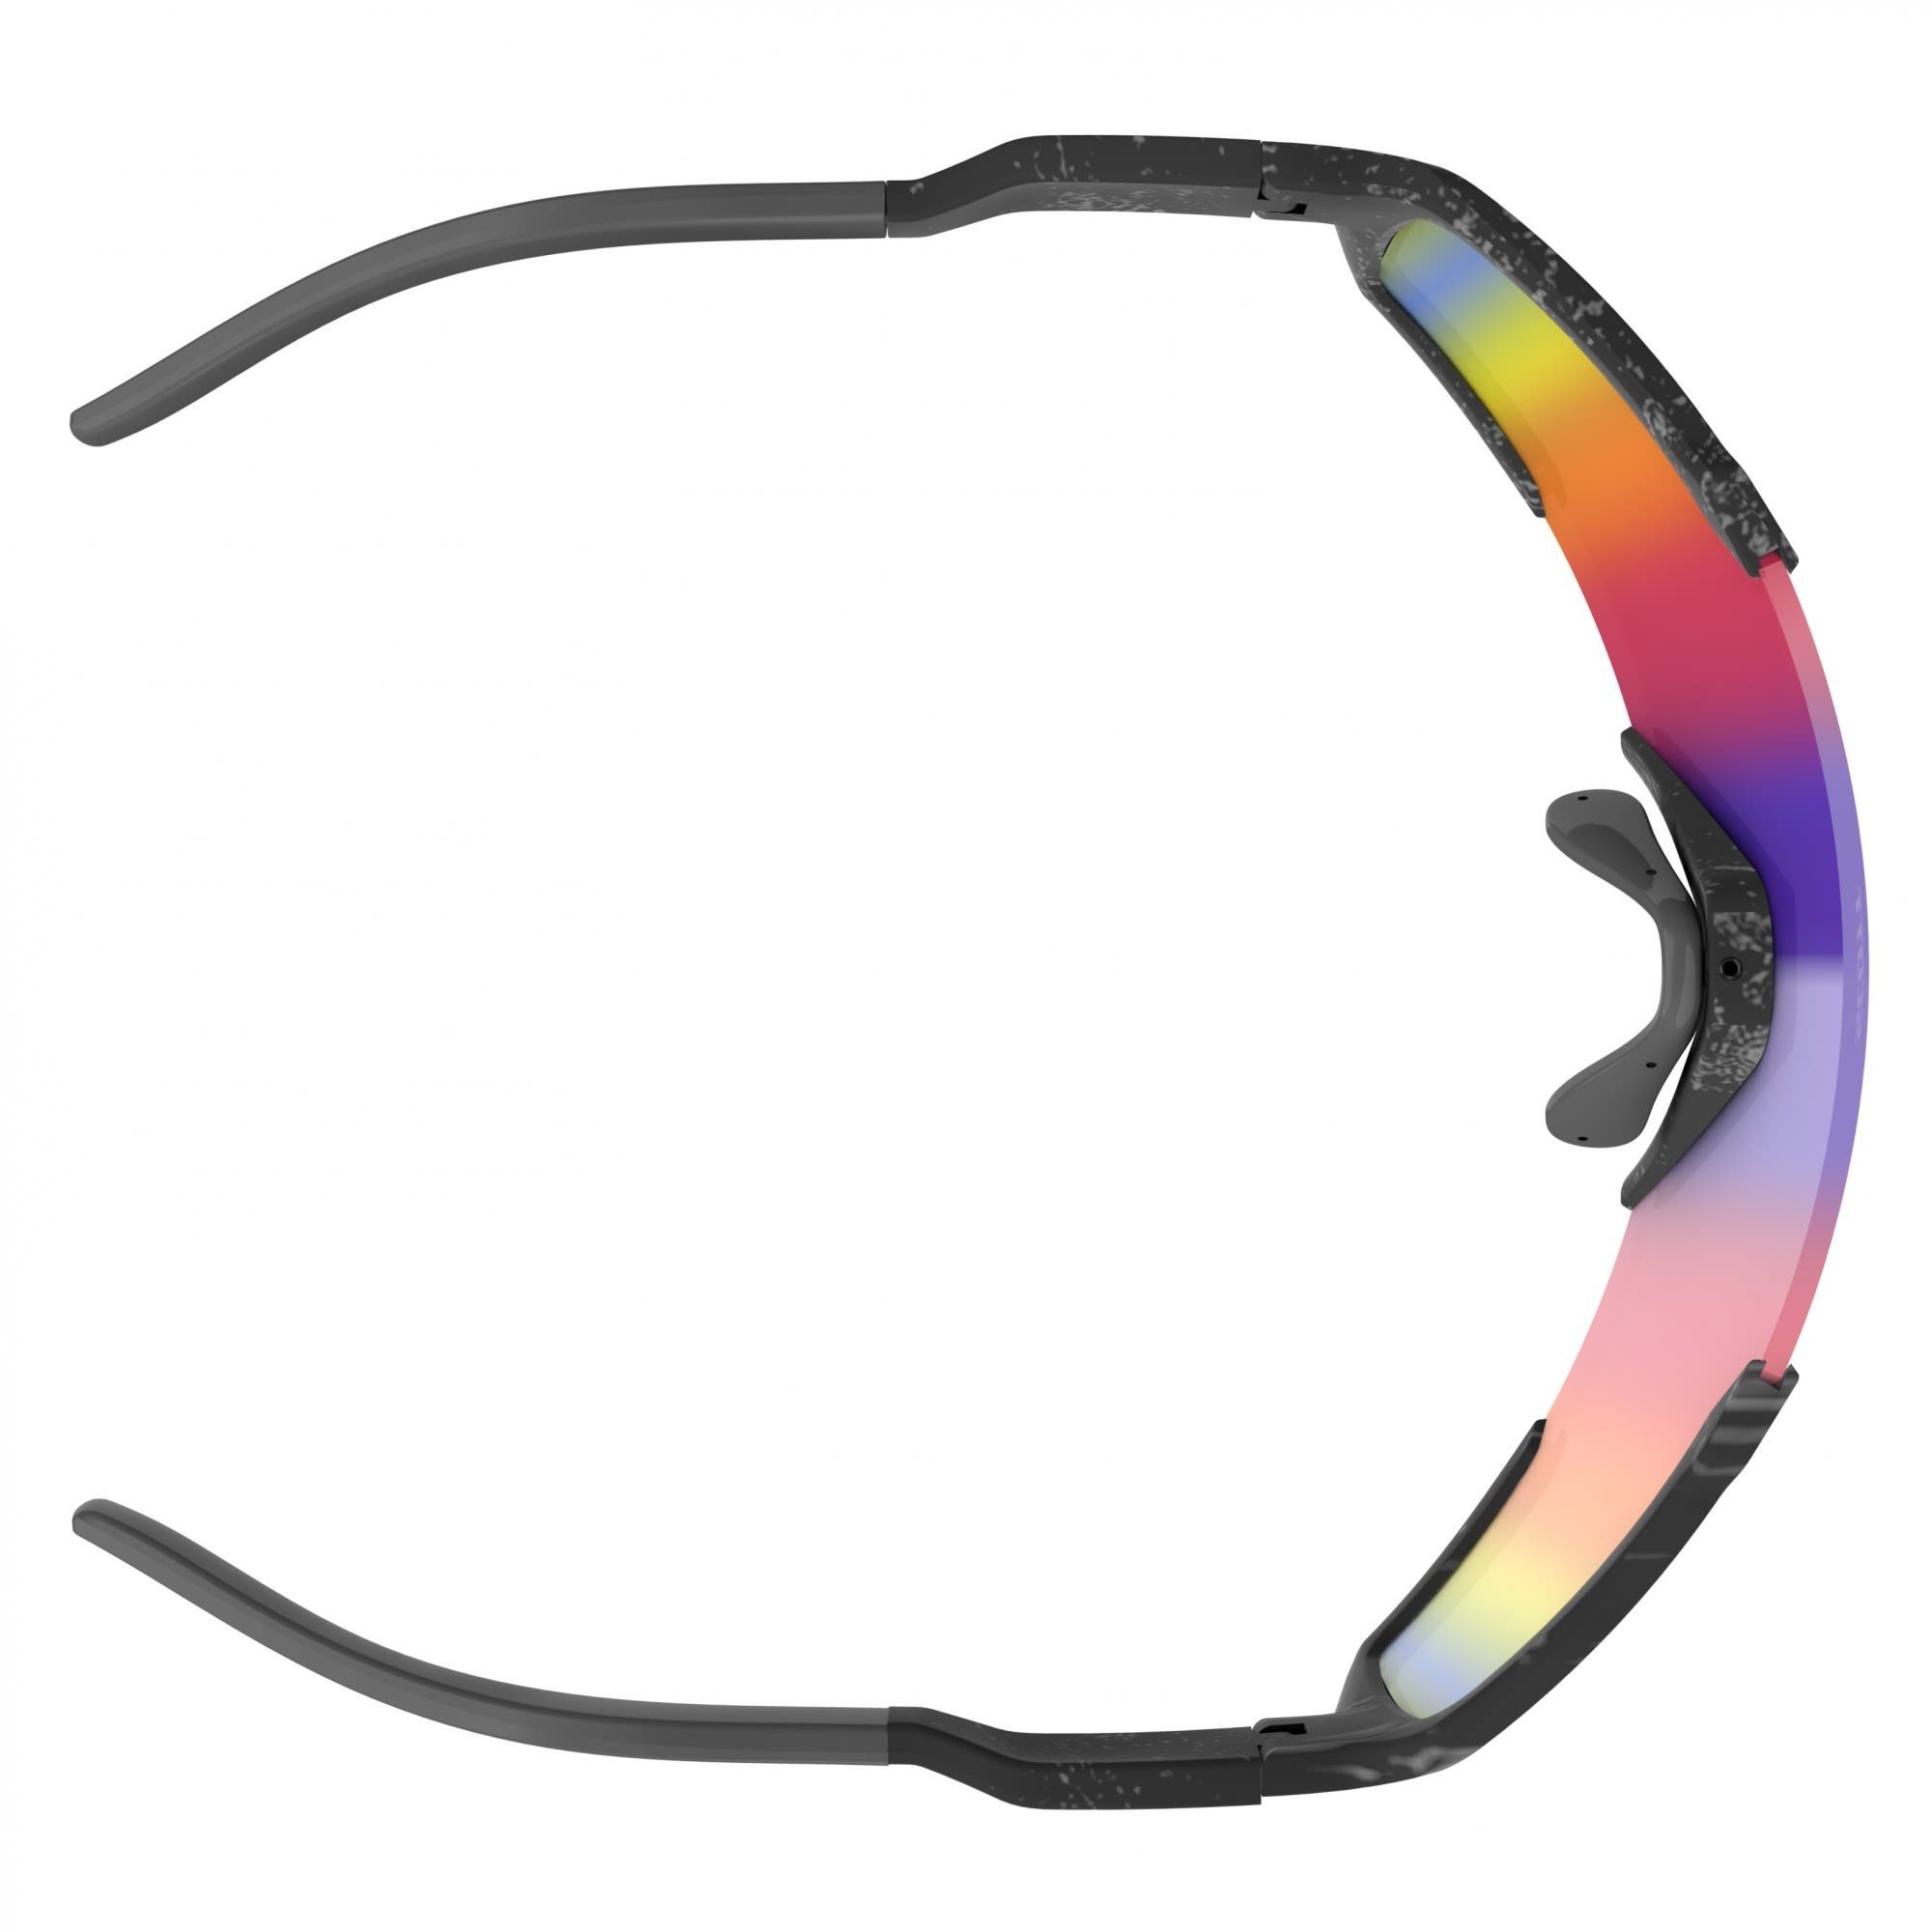 Scott Fahrradbrille Scott Shield Marble Teal Sunglasses Compact - Accessoires Chrome Black